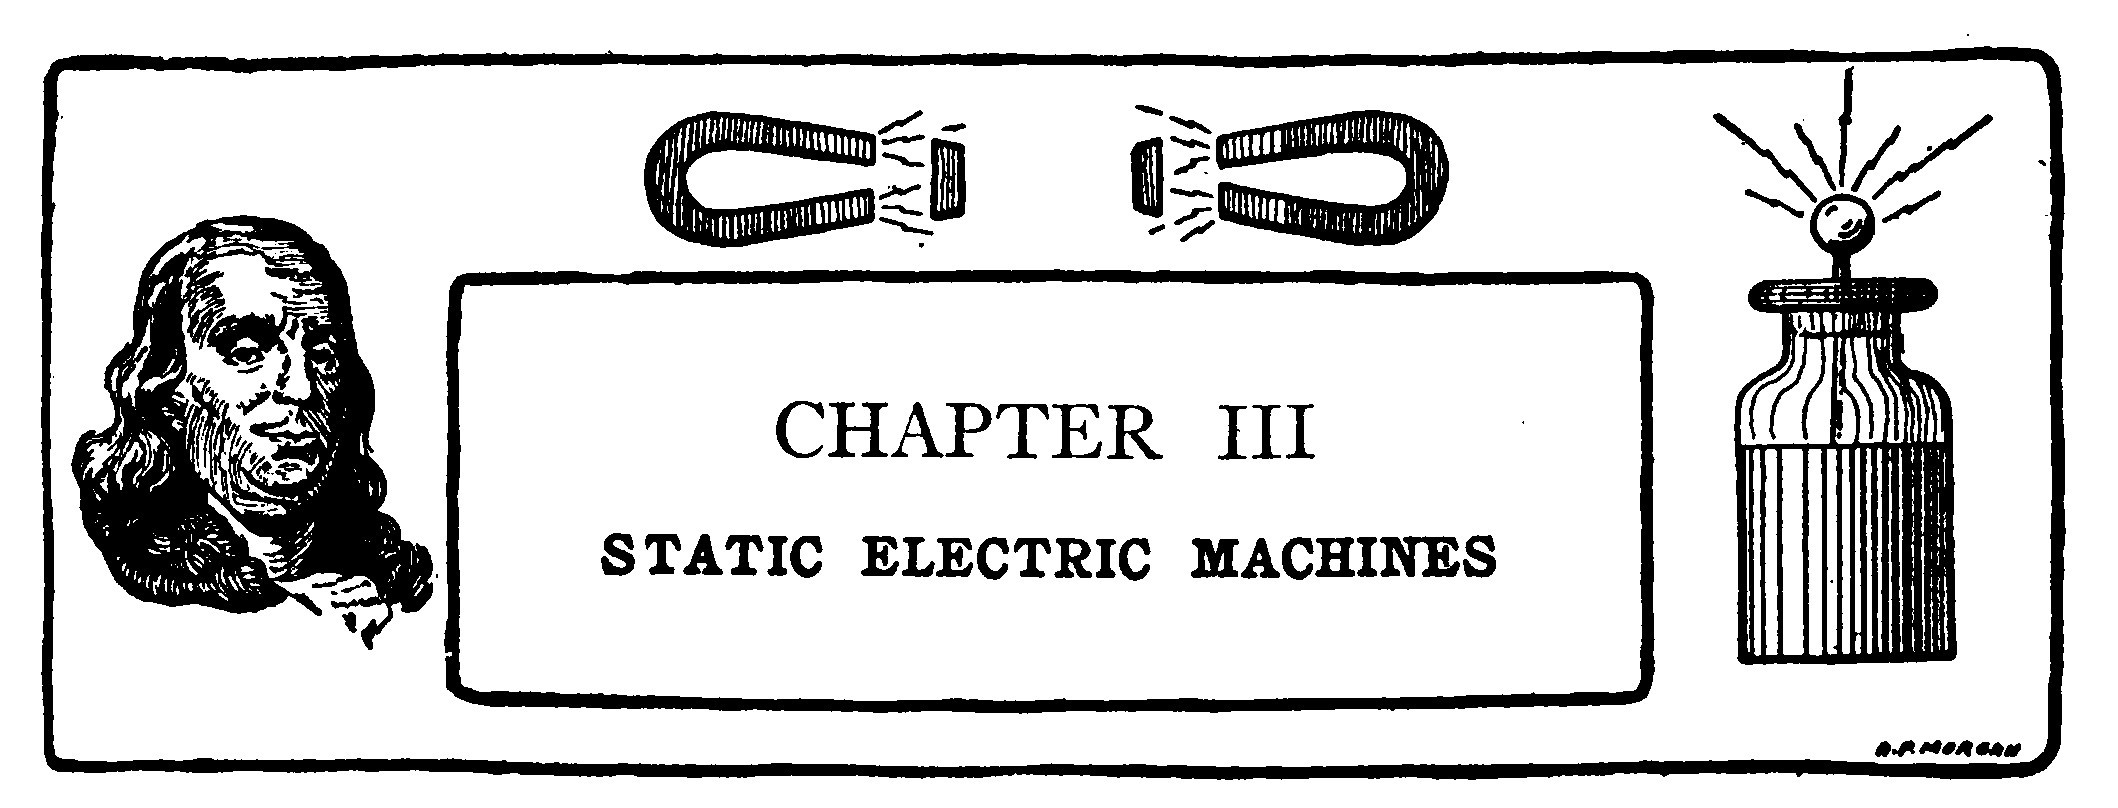 STATIC ELECTRIC MACHINES